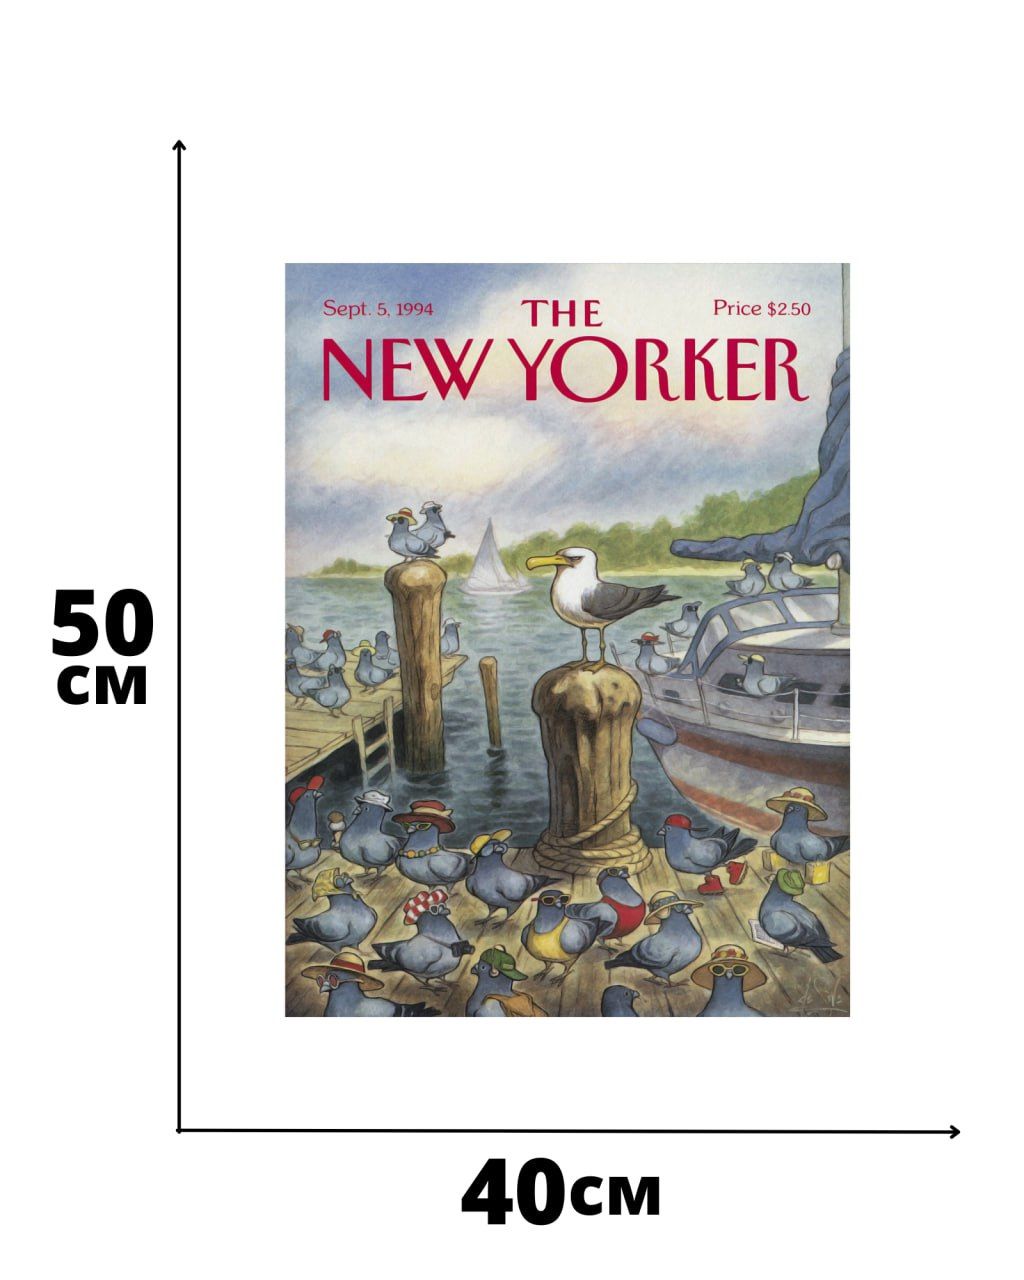 Пиво New Yorker. Часы New Yorker. New Yorker пакет. New Yorker Размеры. New yorker отзывы